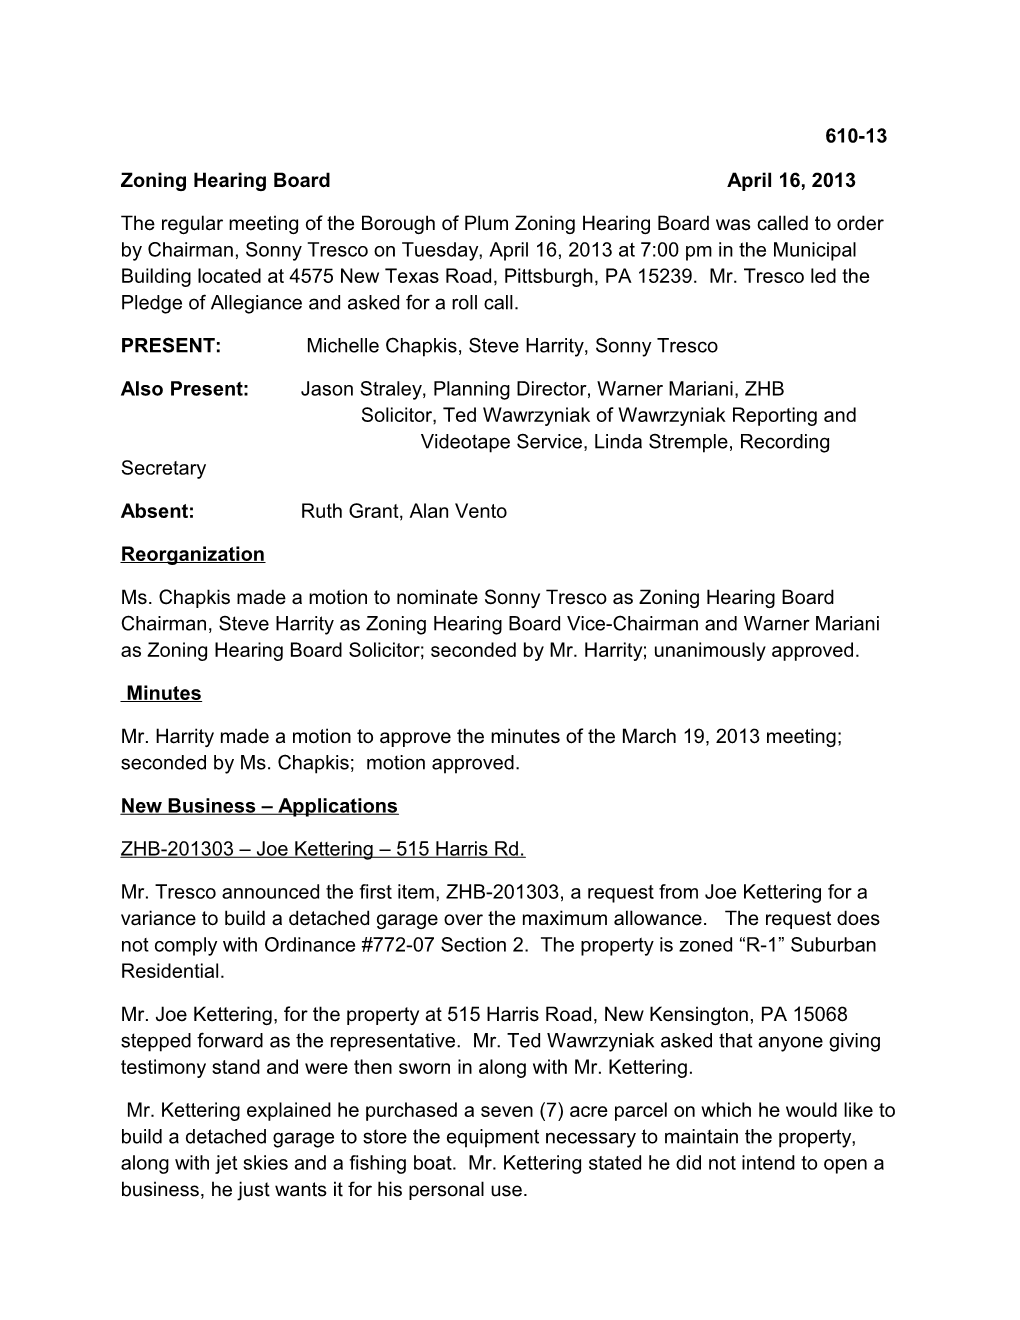 Zoning Hearing Board April 16, 2013